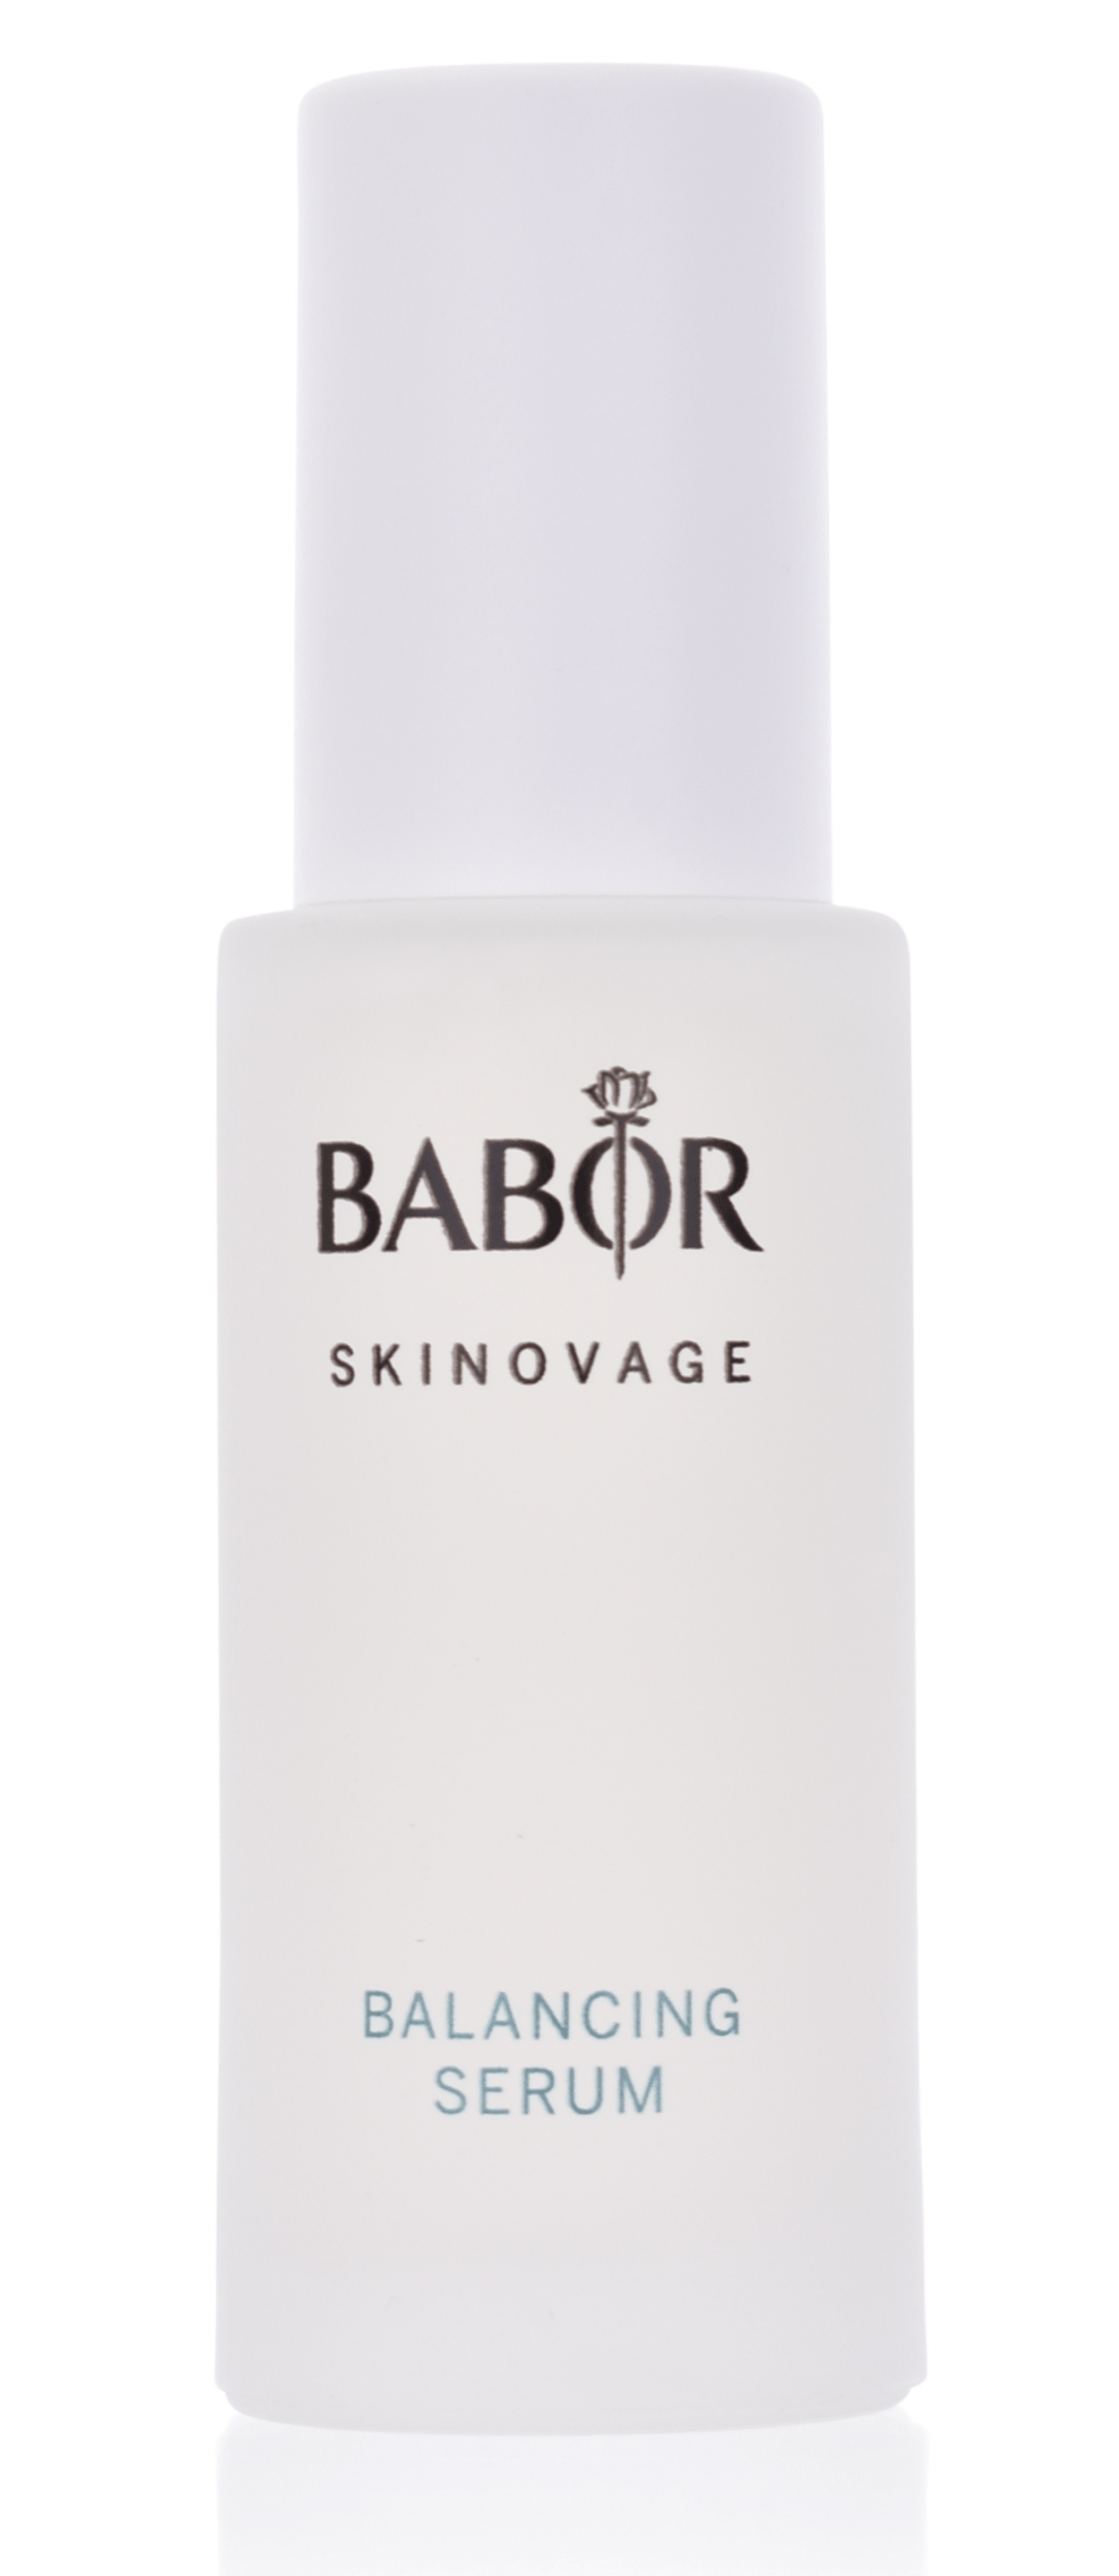 BABOR Skinovage - Balancing Serum 30ml 